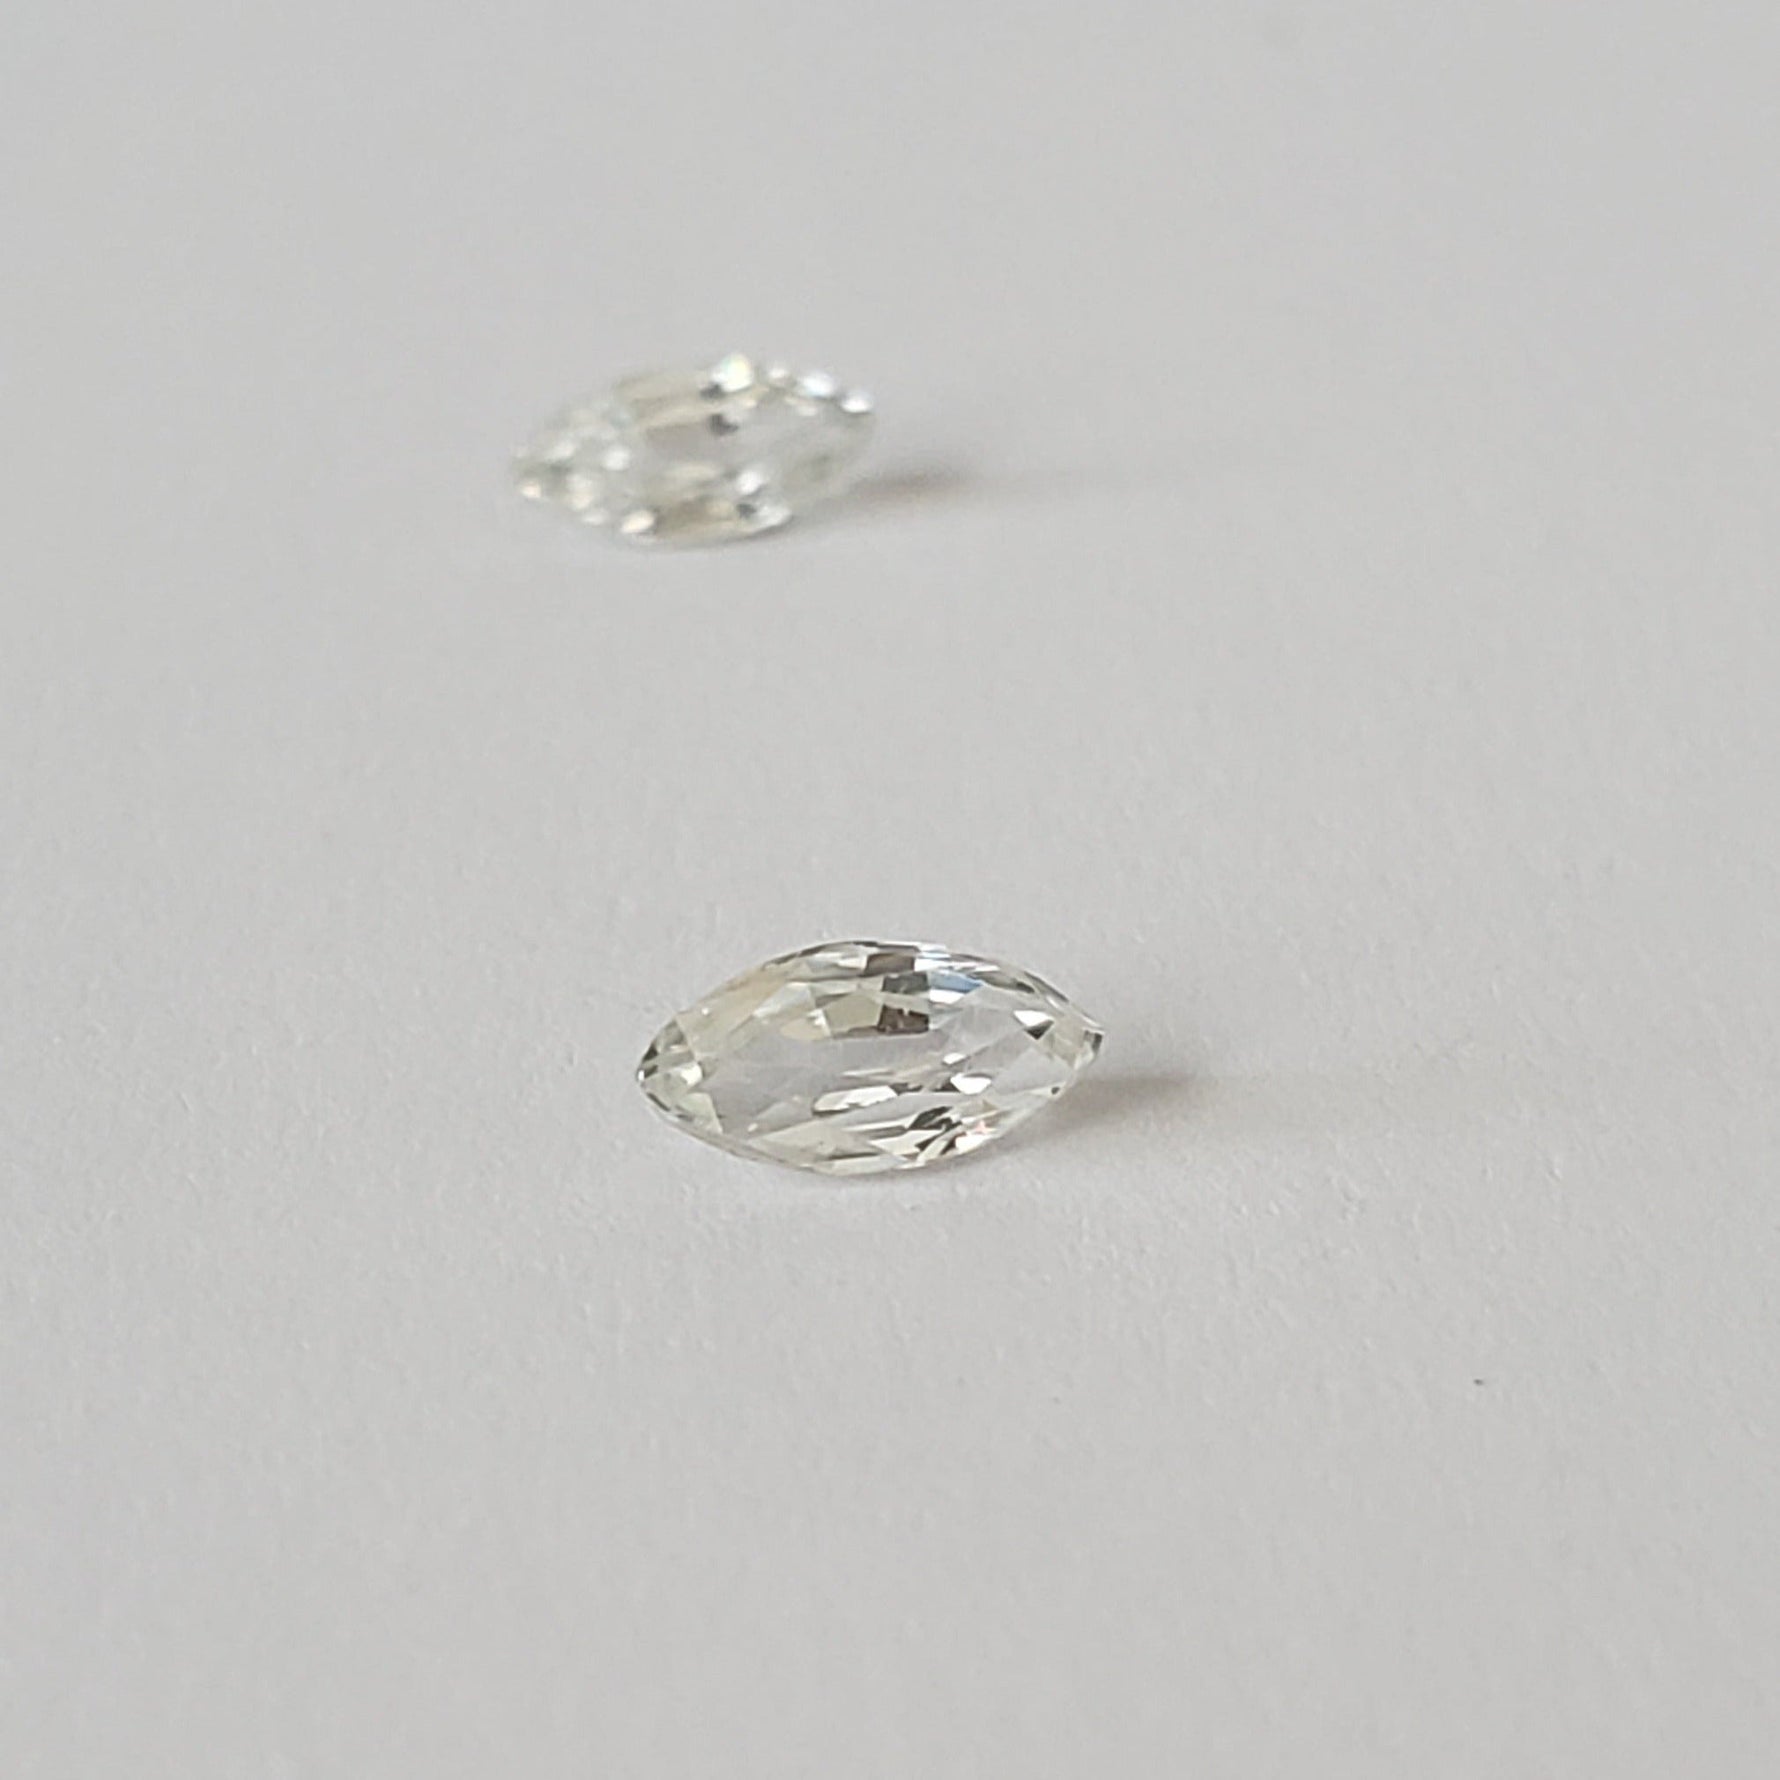 Pair of Zircon Gemstones | Marquise Cut | White | 7.5x3.6mm